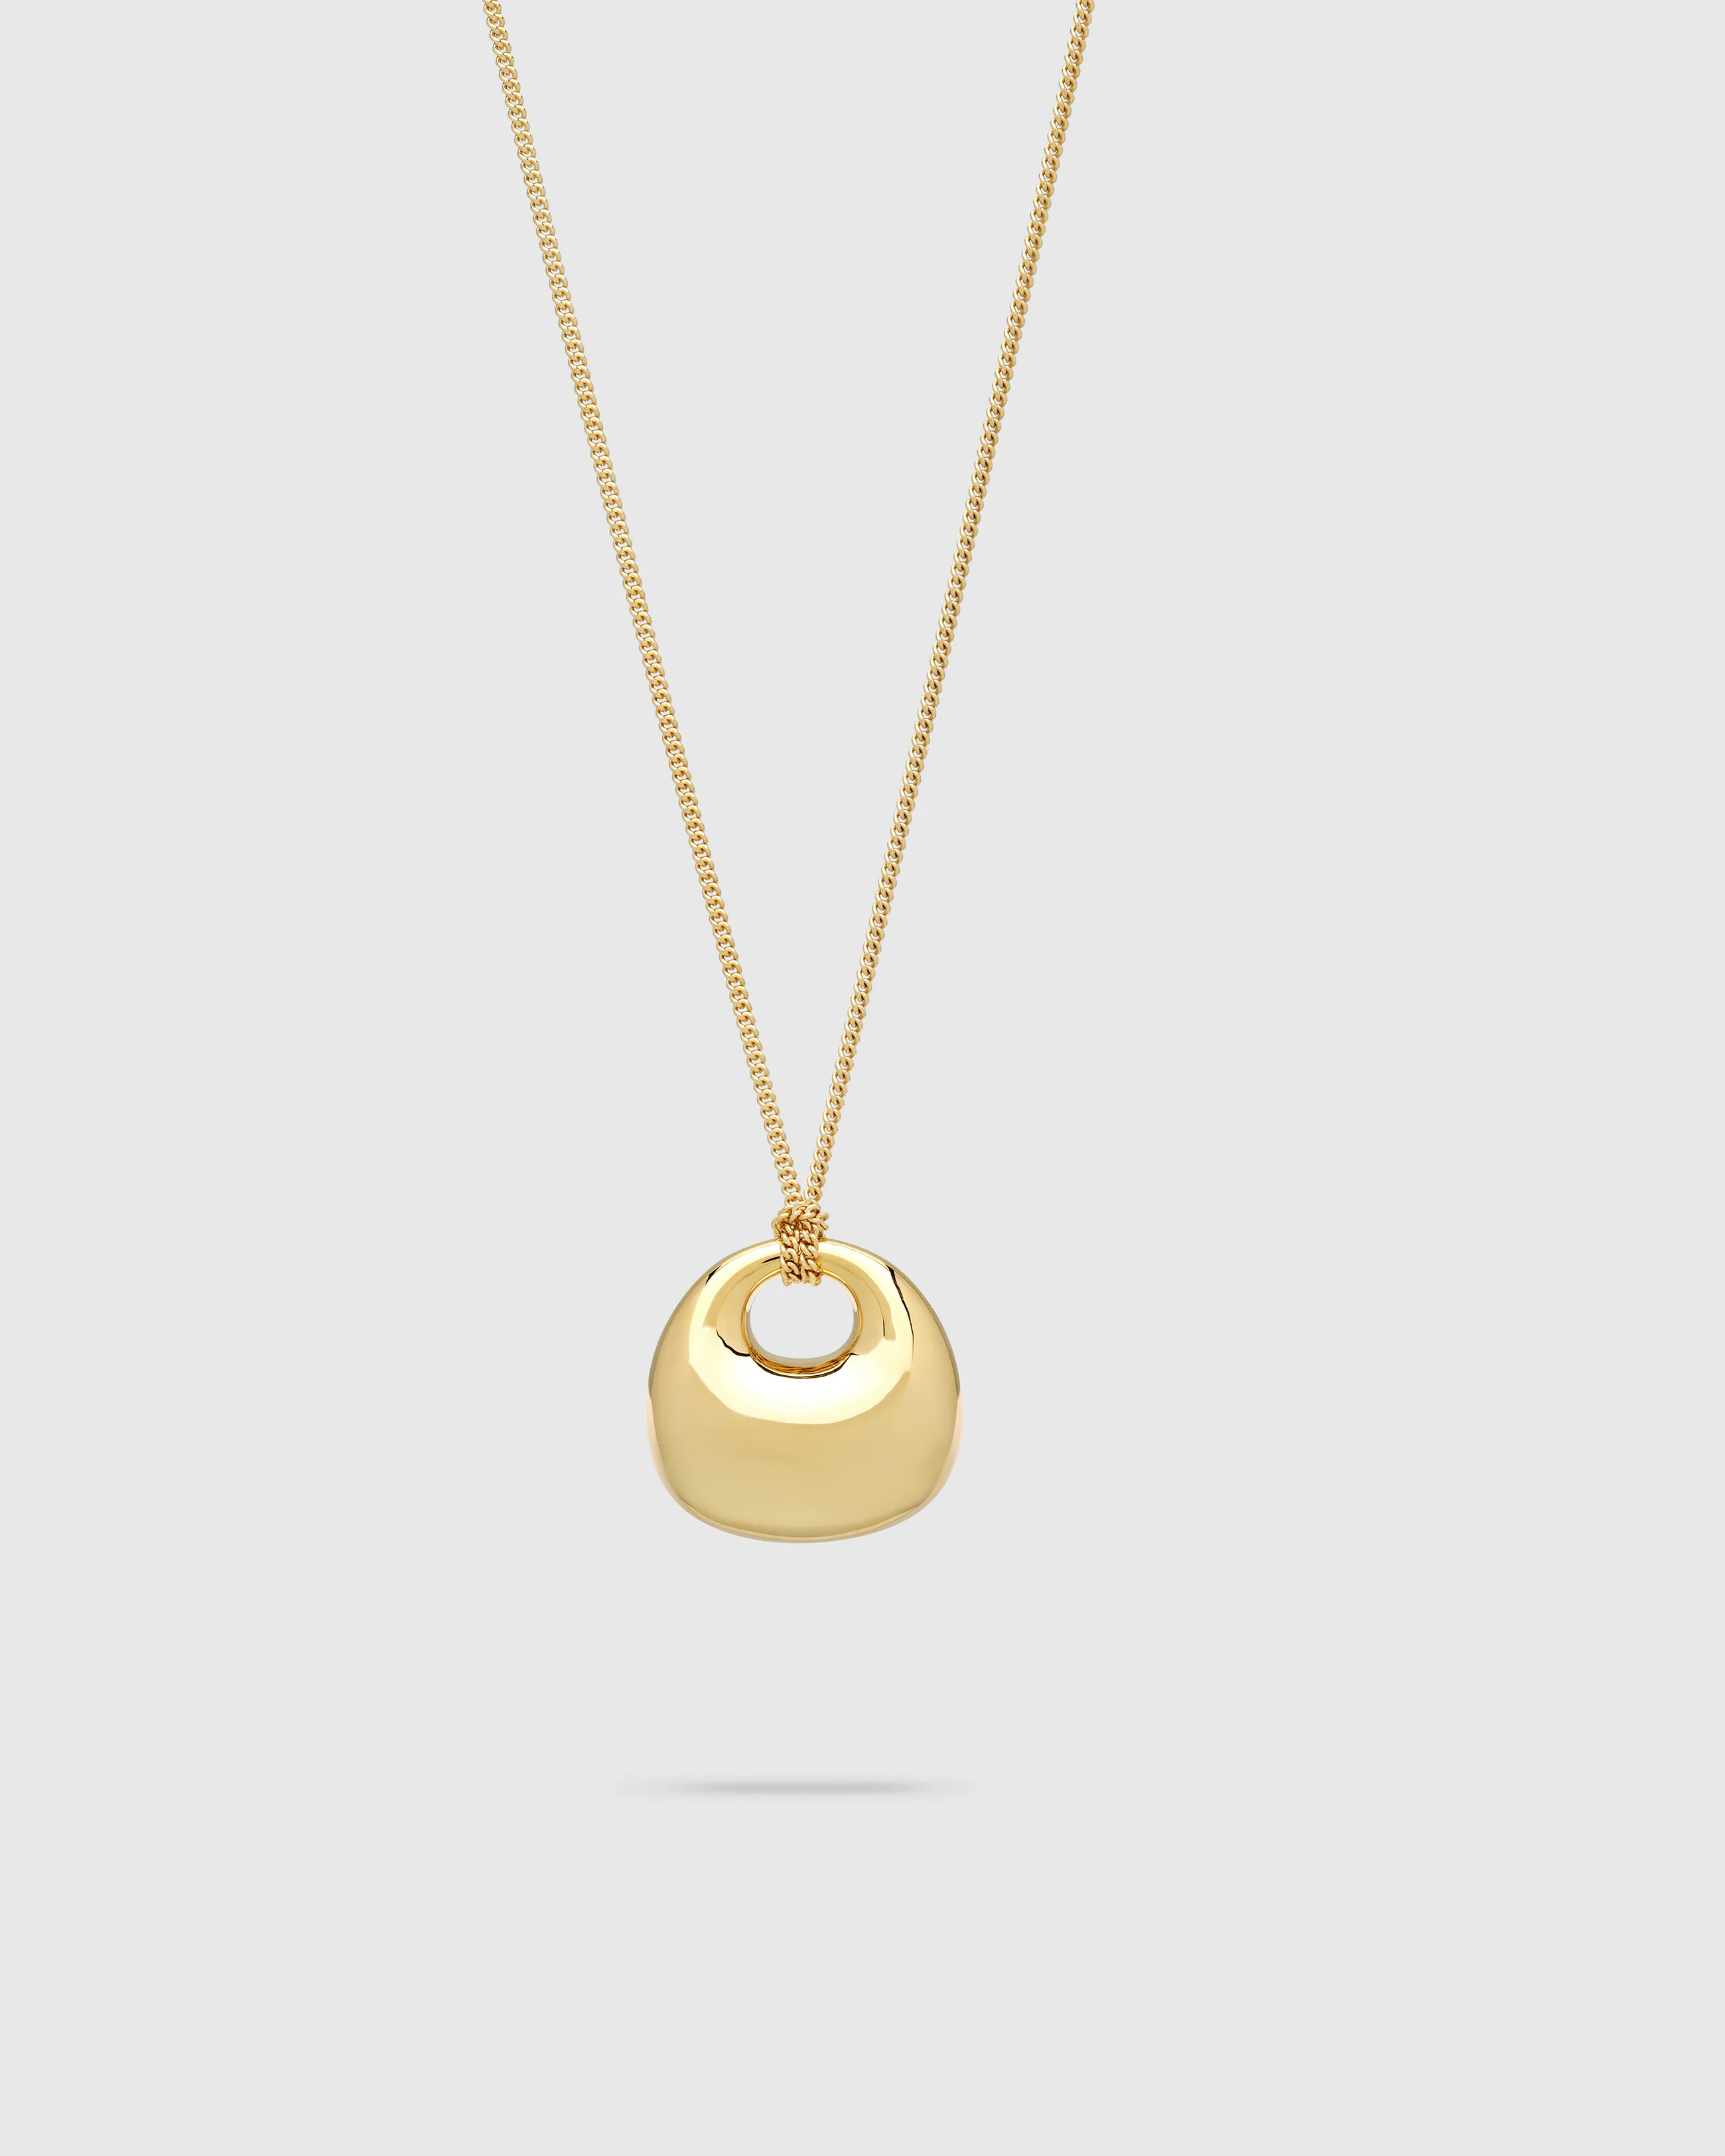 Bao collection - landingpage - Bao pendant gold